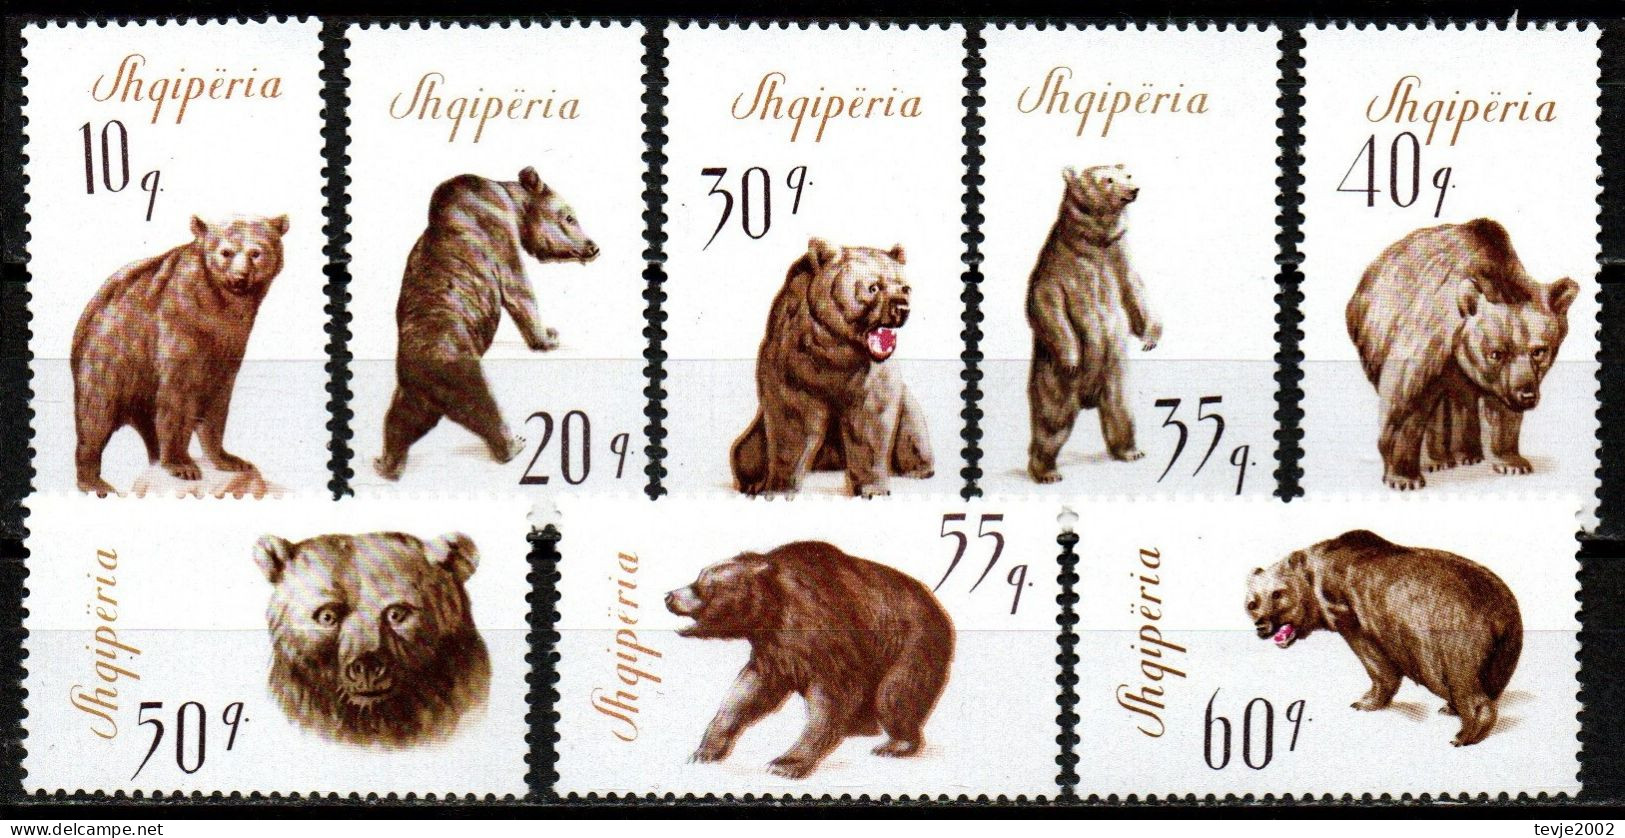 Albanien 1965 - Mi.Nr. 1010 - 1017 - Postfrisch MNH - Tiere Animals Bären Bears - Beren